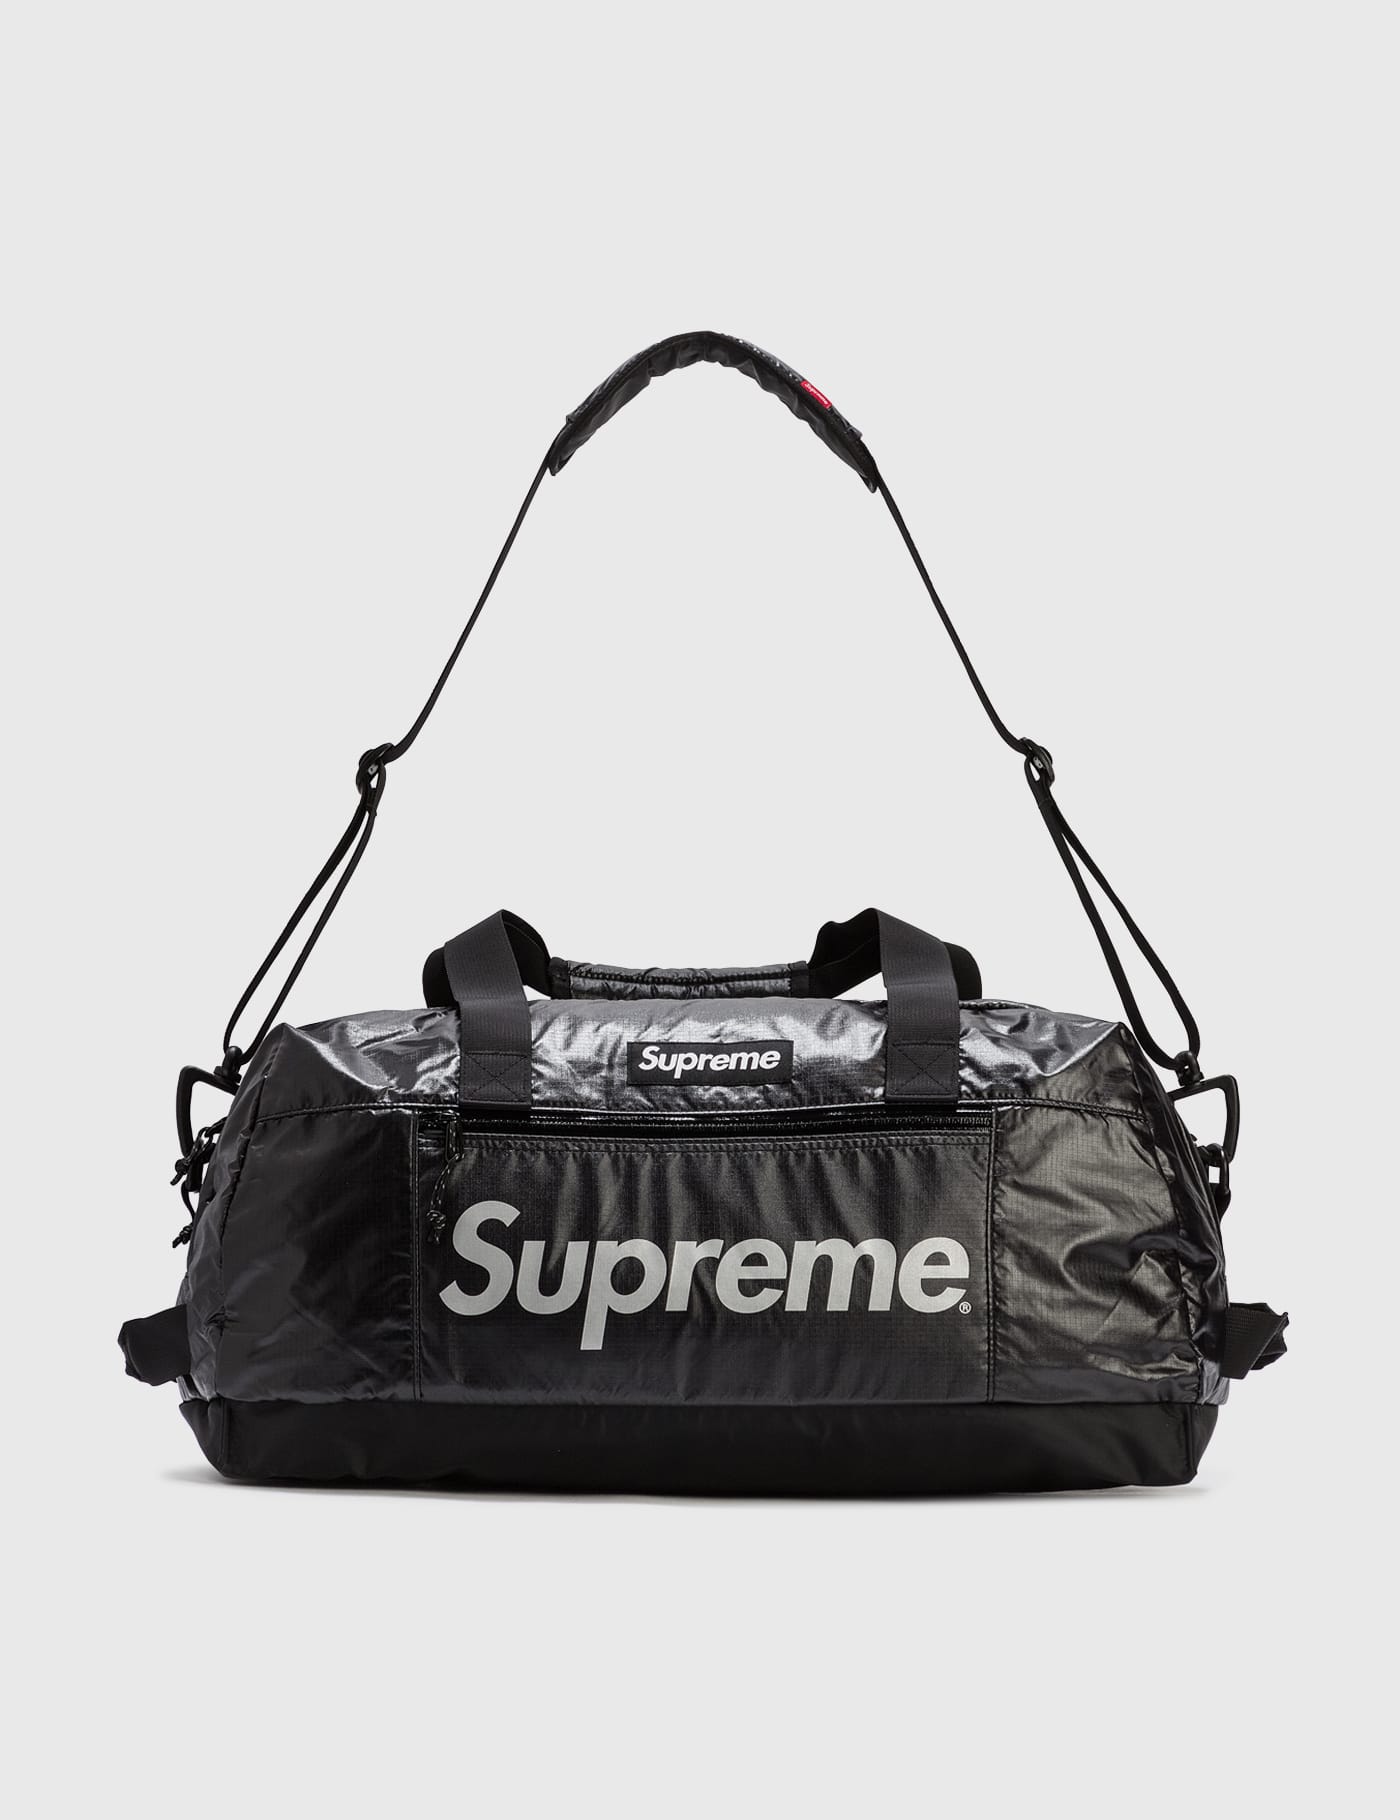 Supreme - Supreme Duffle Bag | HBX - Globally Curated Fashion and 